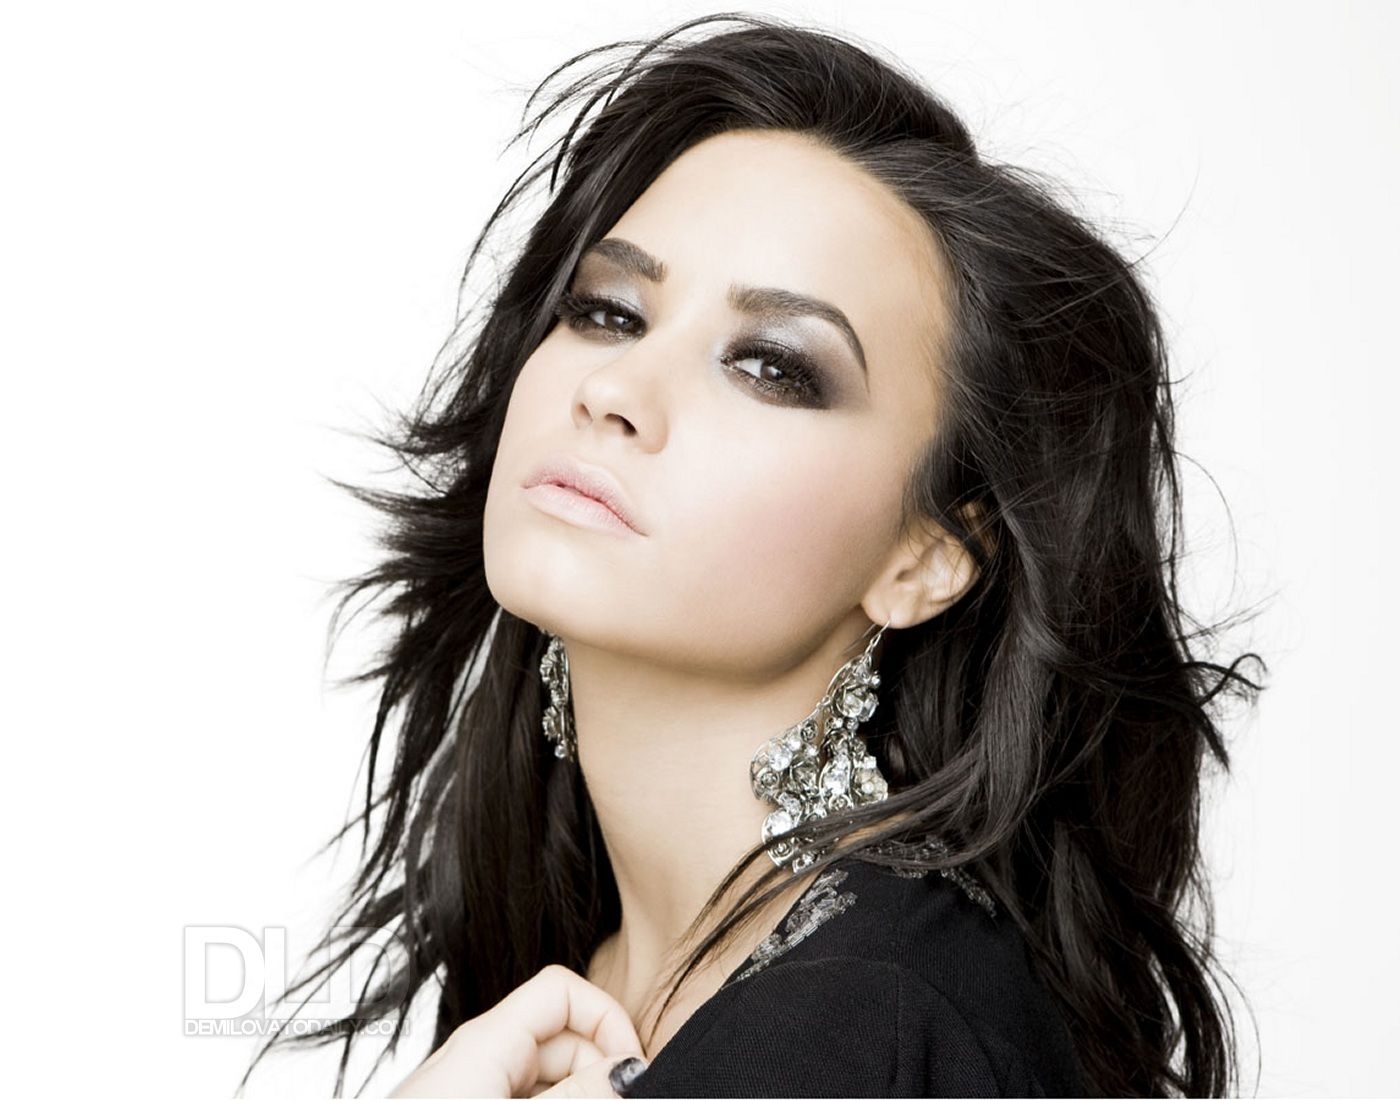 https://blogger.googleusercontent.com/img/b/R29vZ2xl/AVvXsEhFXZR2jLT0y6Eqio9PxpkQ1Ifh_B7V9dSYRIvmtjpwf9HQdbIyeG9q6Ve4FL59d1nke4RNg73inSi6CyZD70RQu5KNjBKAW0FhjWTutdvViZdxGCsqillcH2cHTm7W7JY7c44xFqYjydju/s1600/Mulher-Demi+Lovato+-+by+AL..jpg